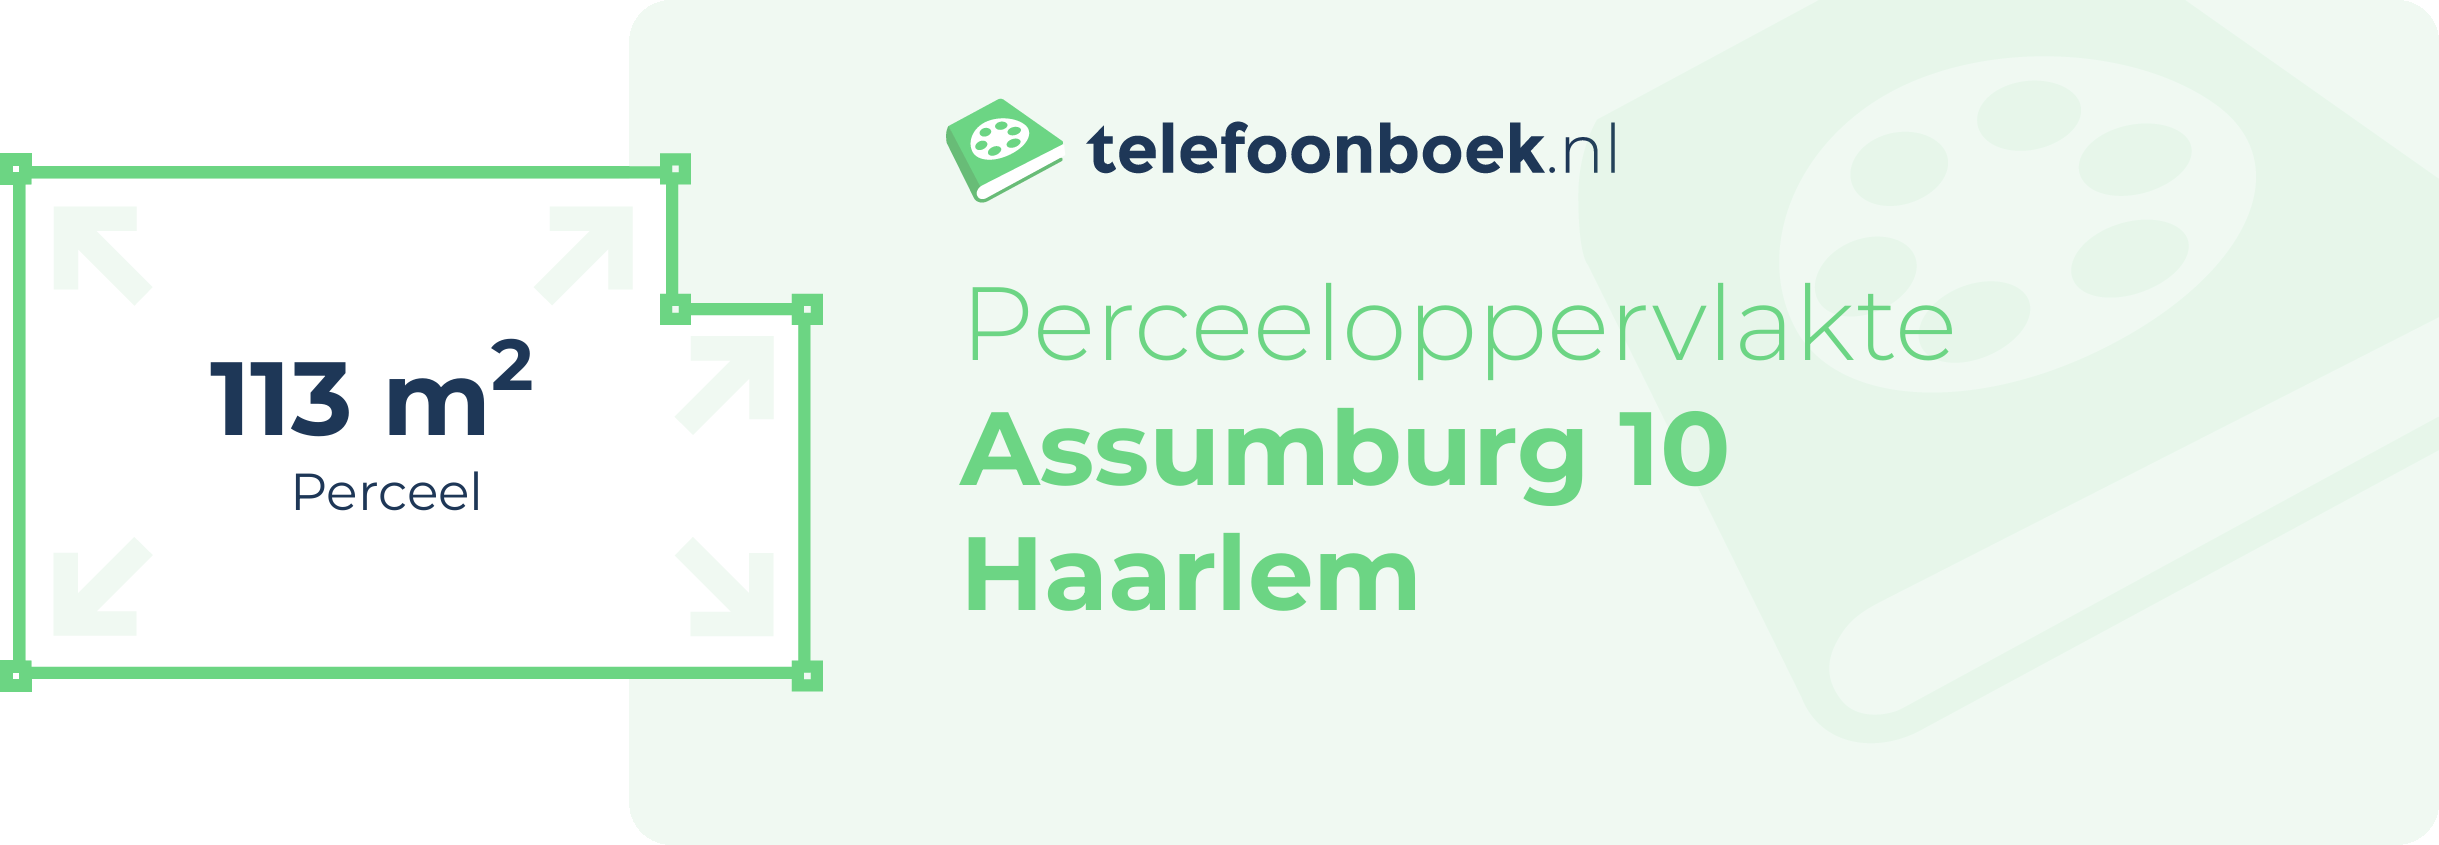 Perceeloppervlakte Assumburg 10 Haarlem